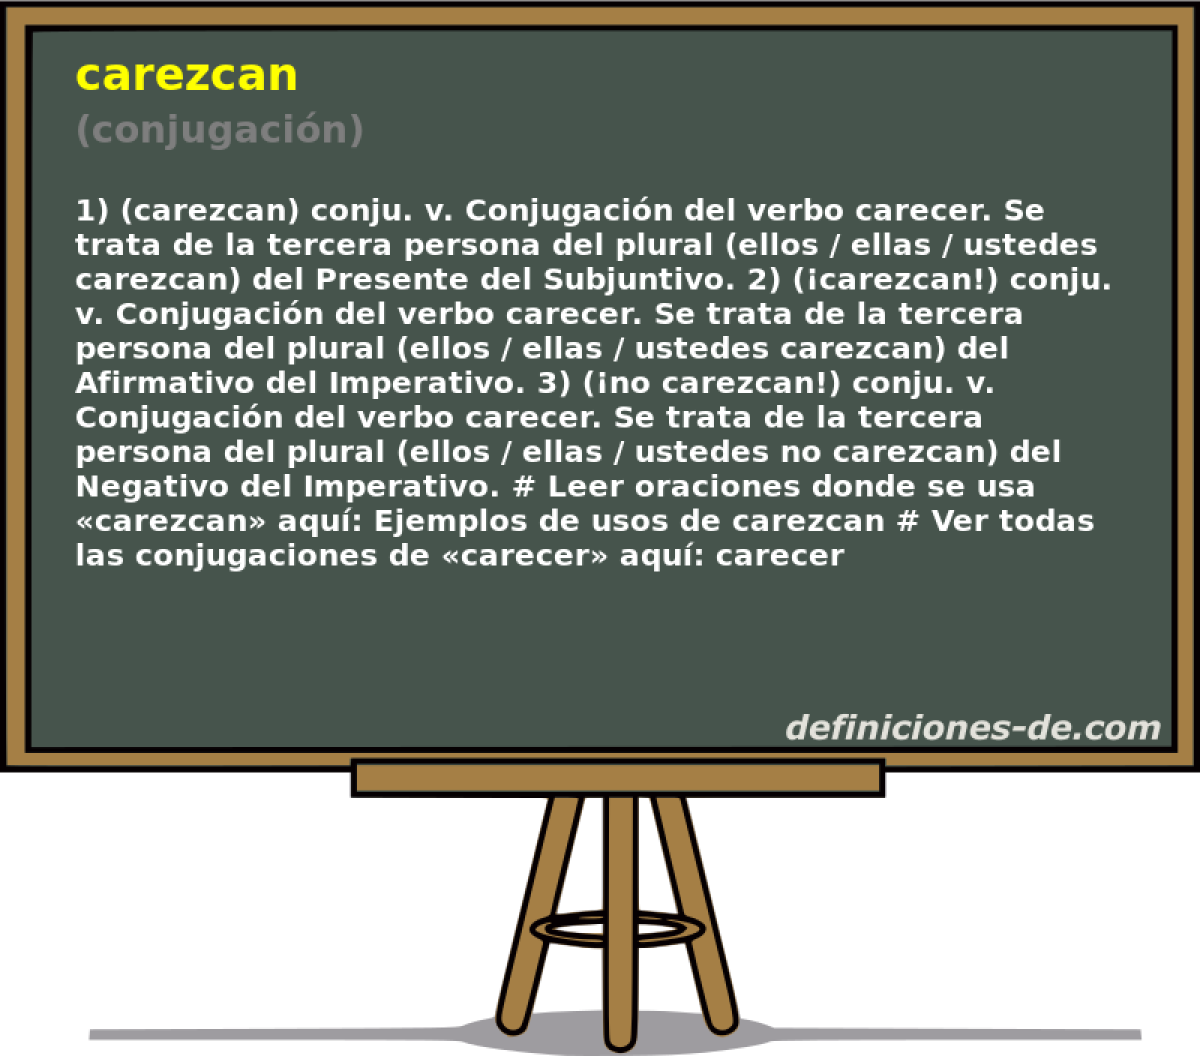 carezcan (conjugacin)